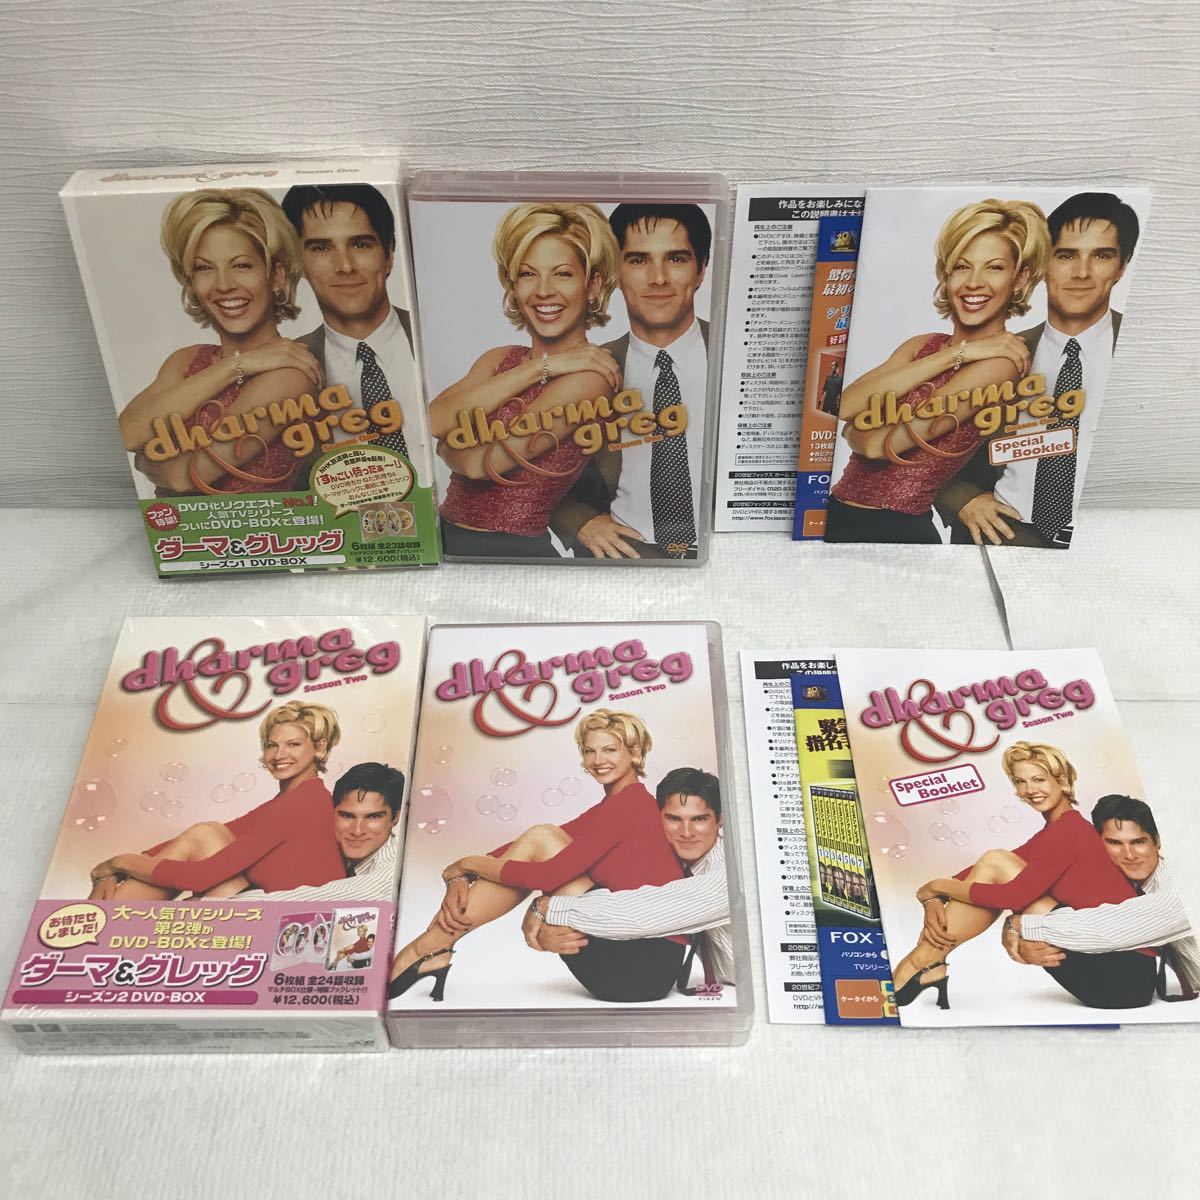 PY1213D ダーマ&グレッグ Dharma&Greg シーズン 1 2 DVD BOX ボックス 2本セット セル版 帯付き 日本語吹替 海外 ドラマ 20世紀フォックス _画像5